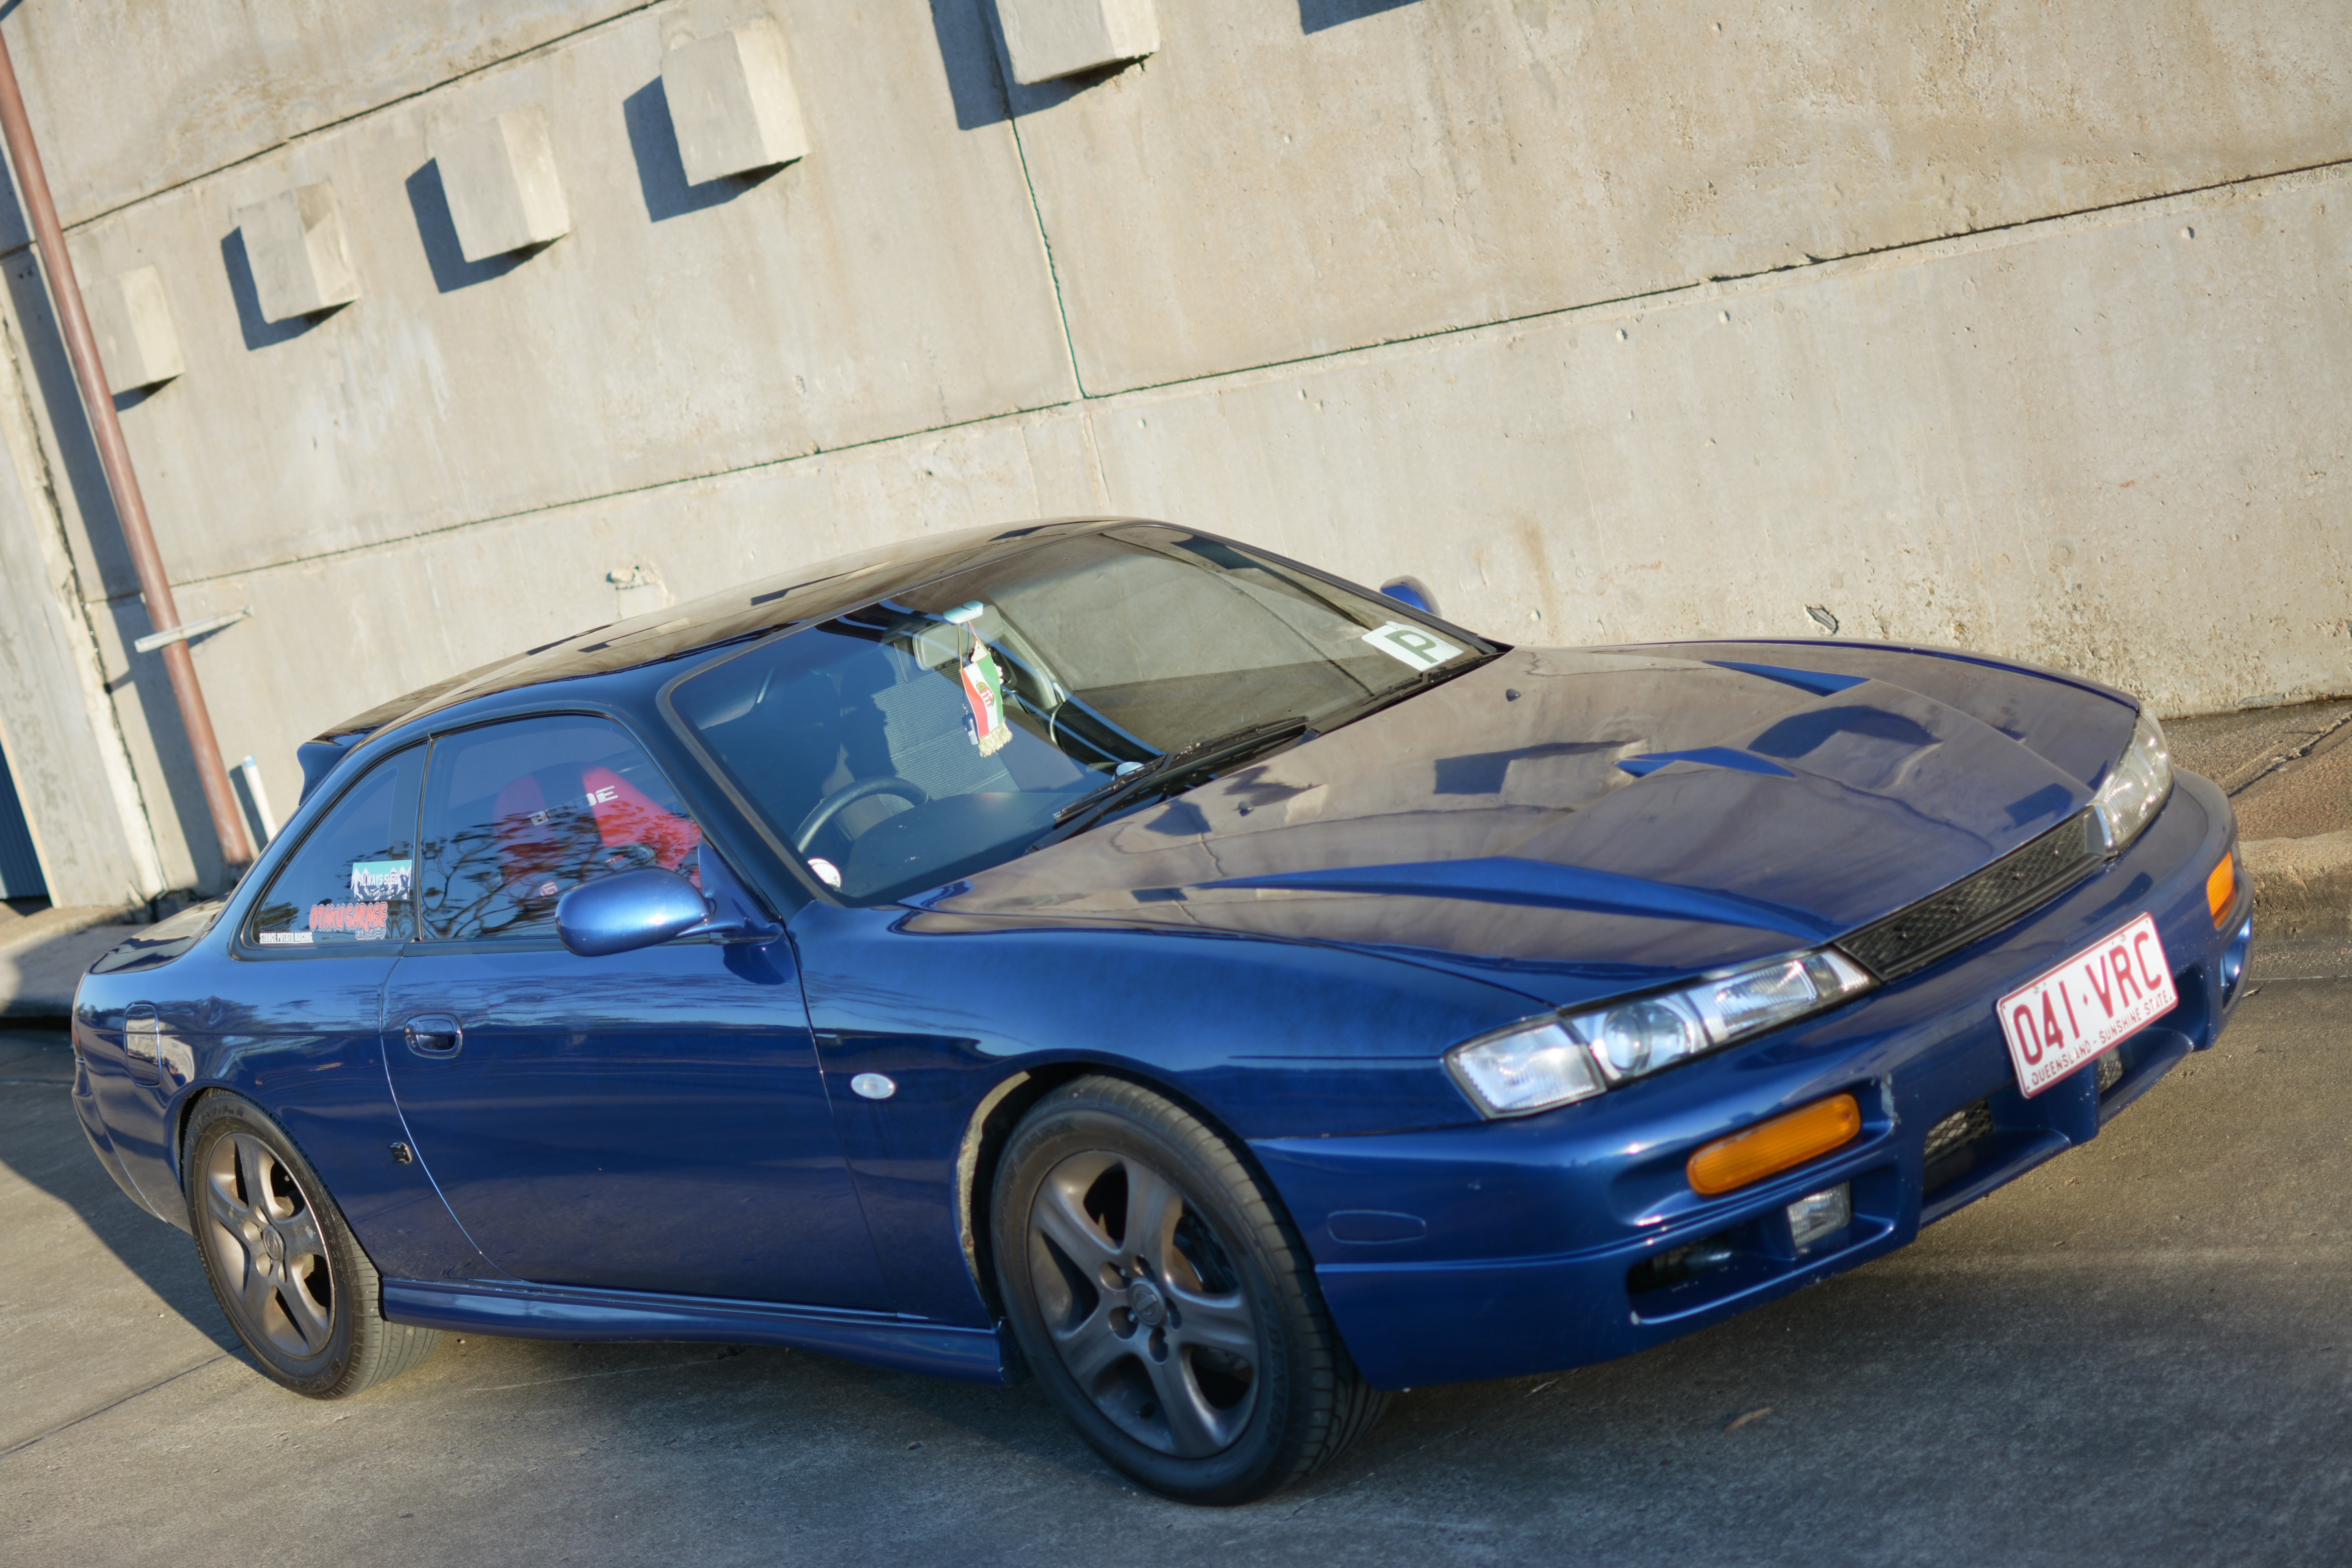 1998 Nissan 200SX